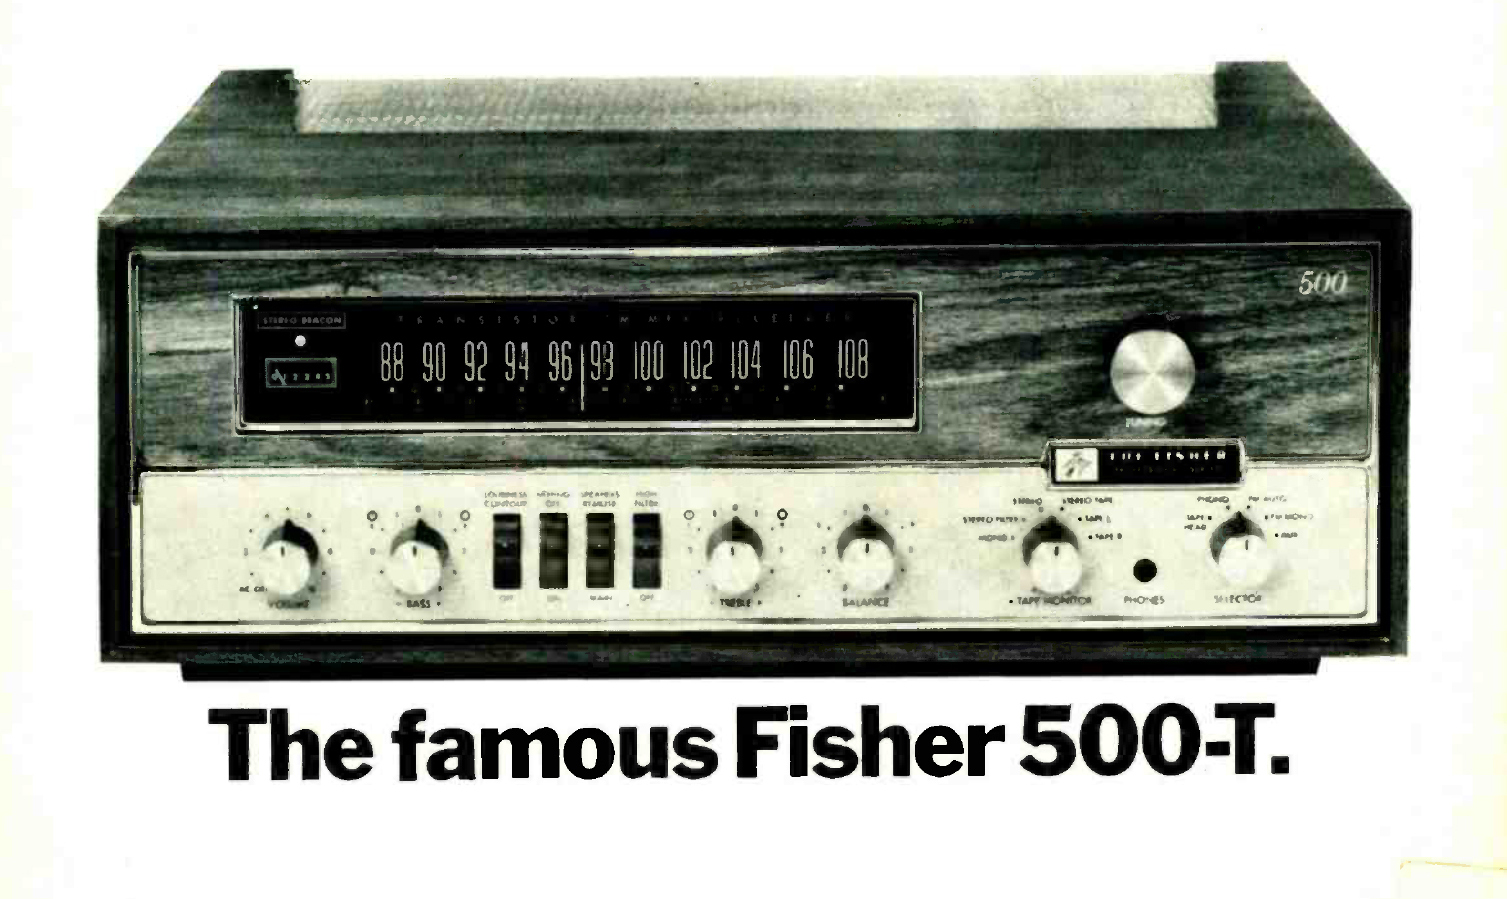 Fisher 500-T-Werbung 1967.jpg